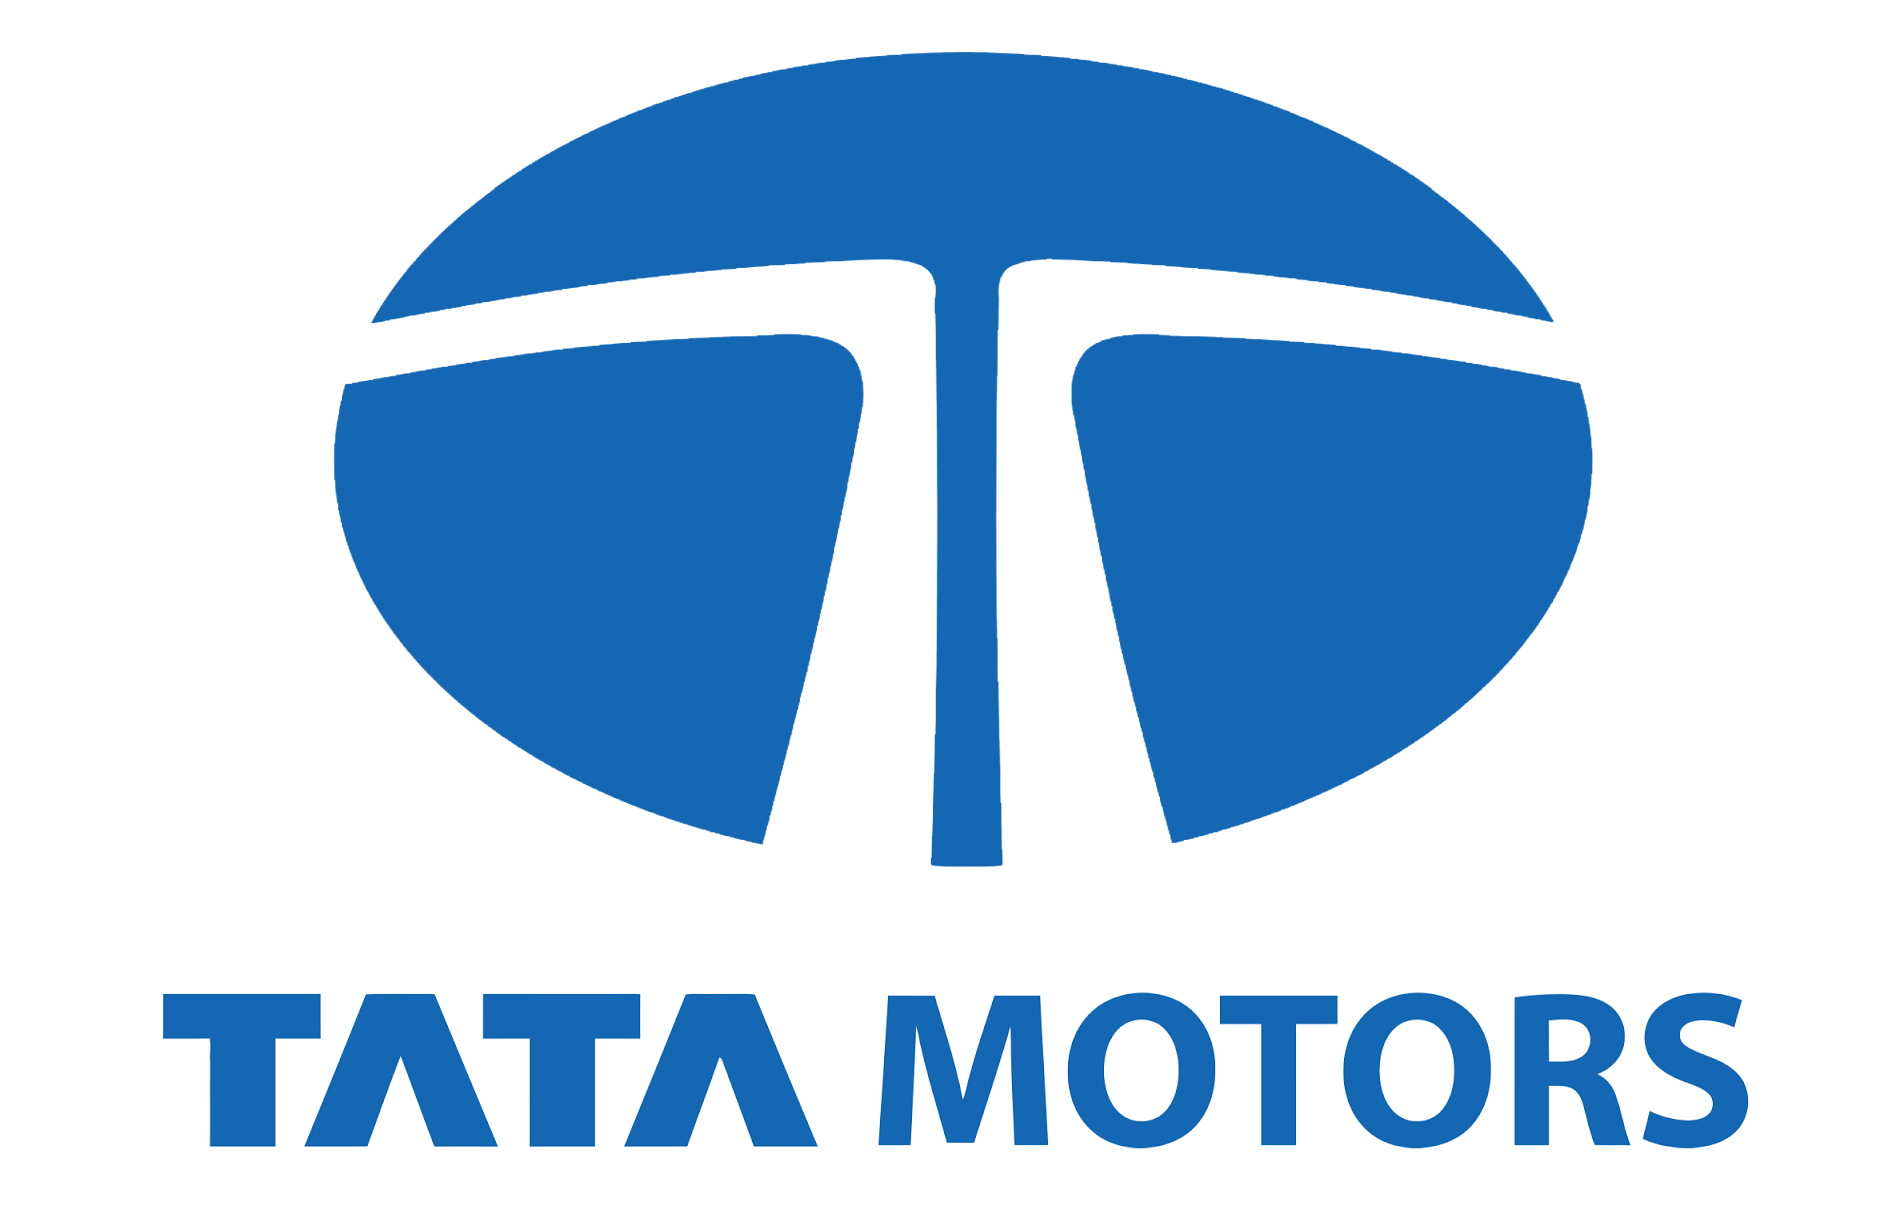 Tata Cliq logo redesign by Workline Design on Dribbble